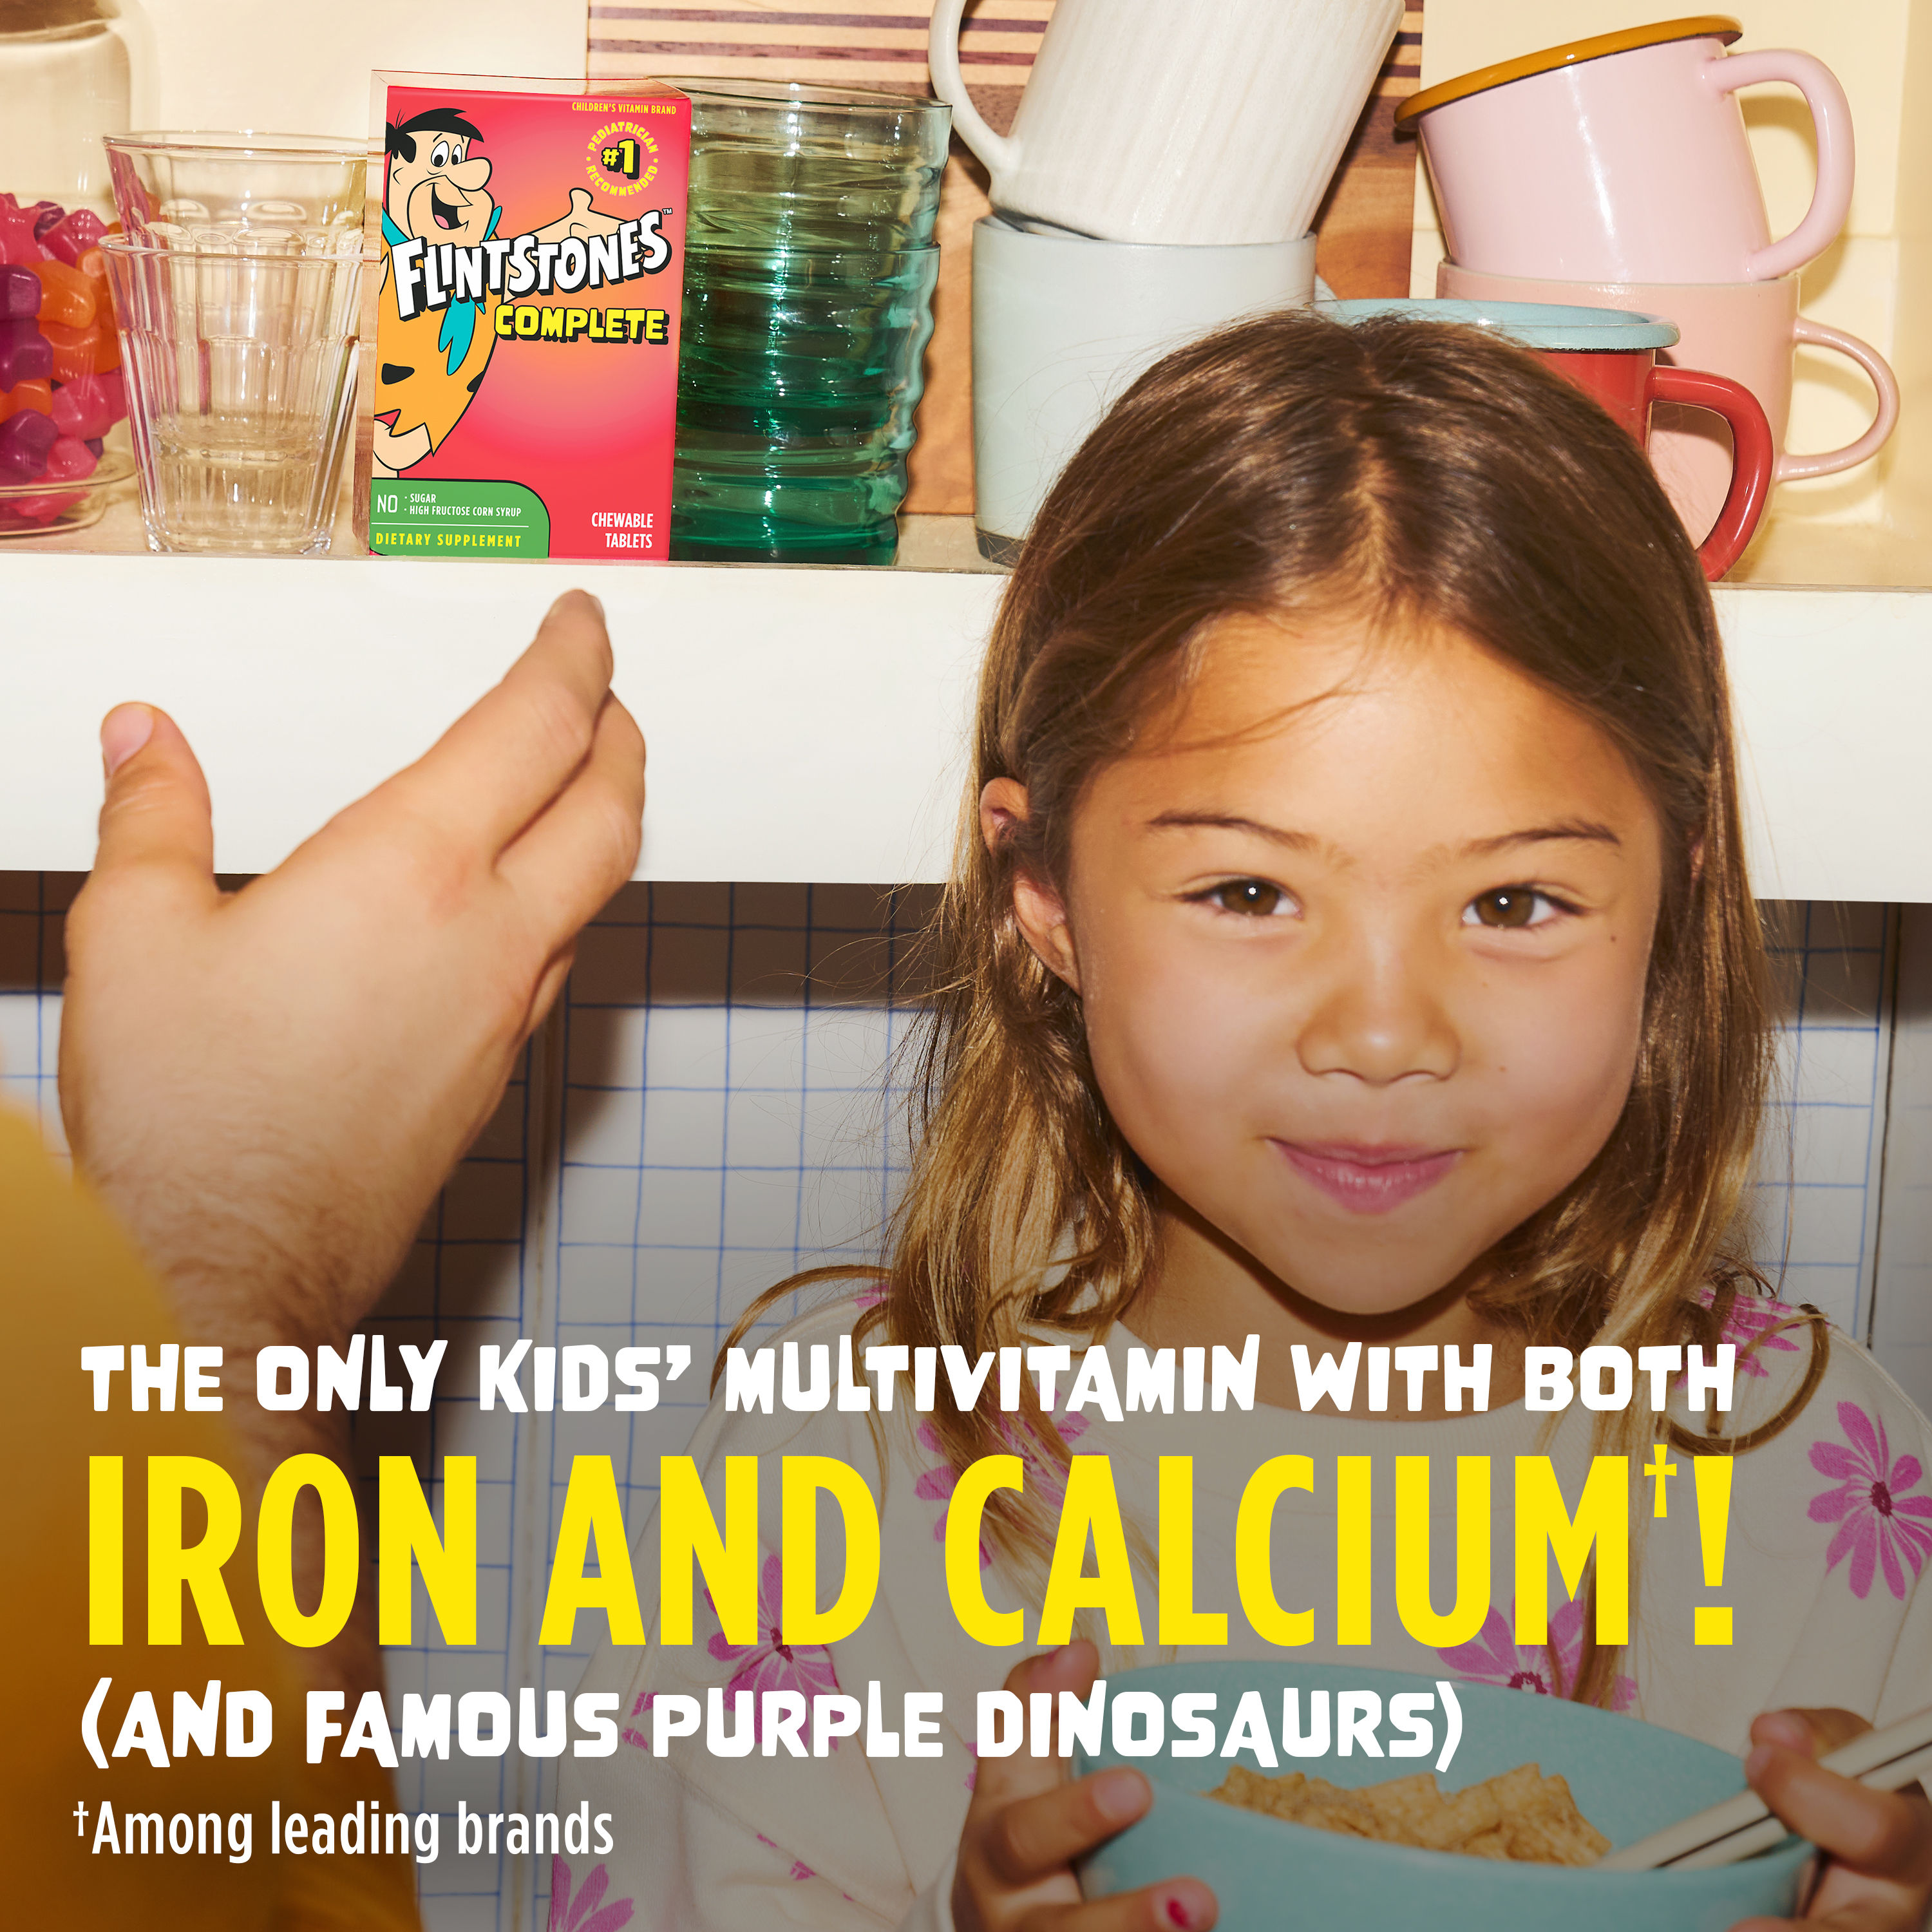 Flintstones Chewable Kids Vitamin, Multivitamin for Kids, 150 Count - image 4 of 14